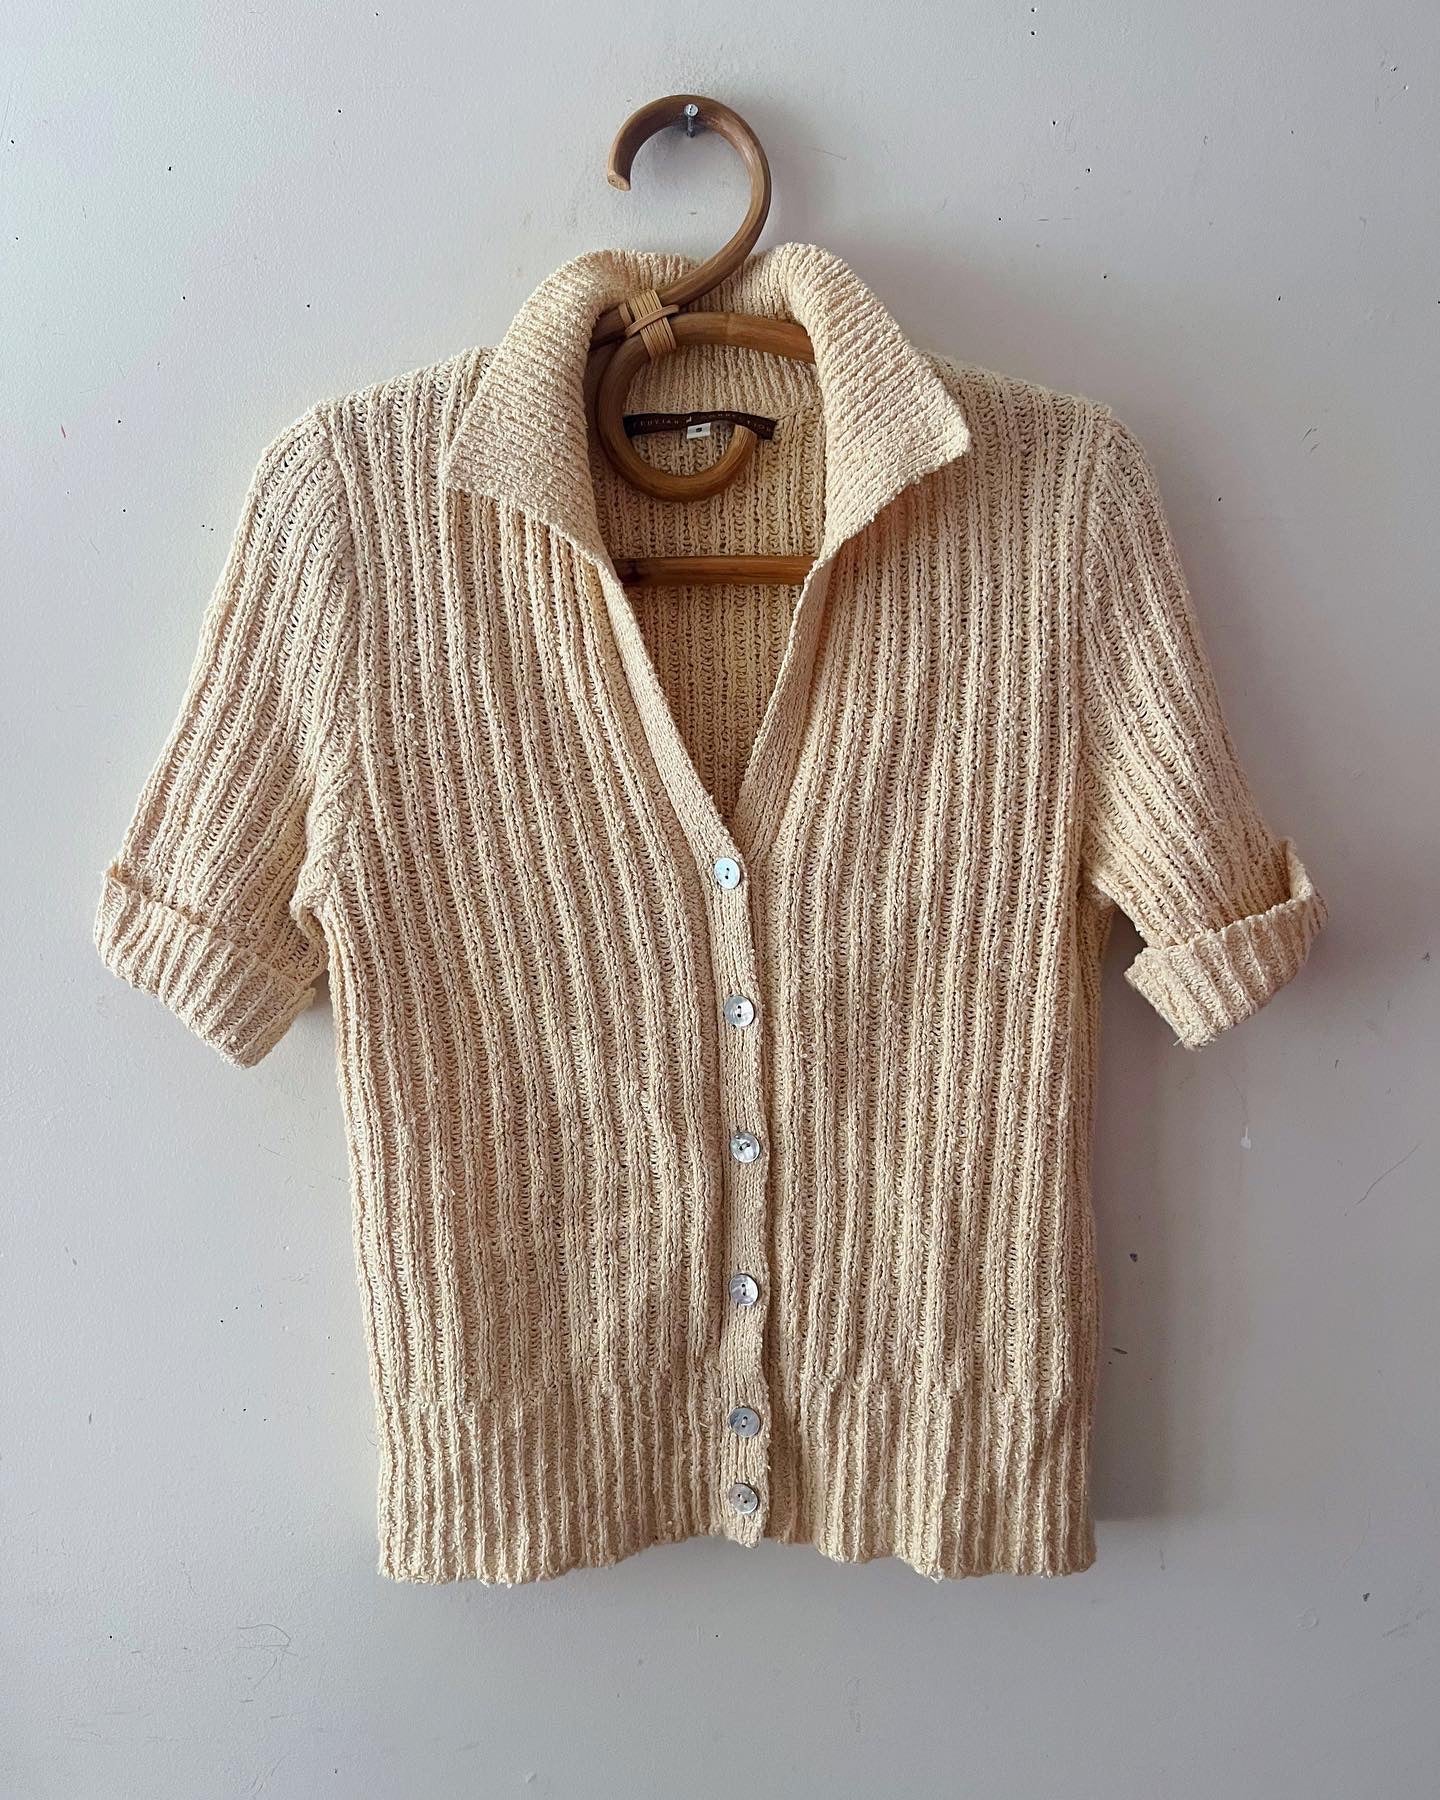 Peruvian Textured Knit Cardigan Top